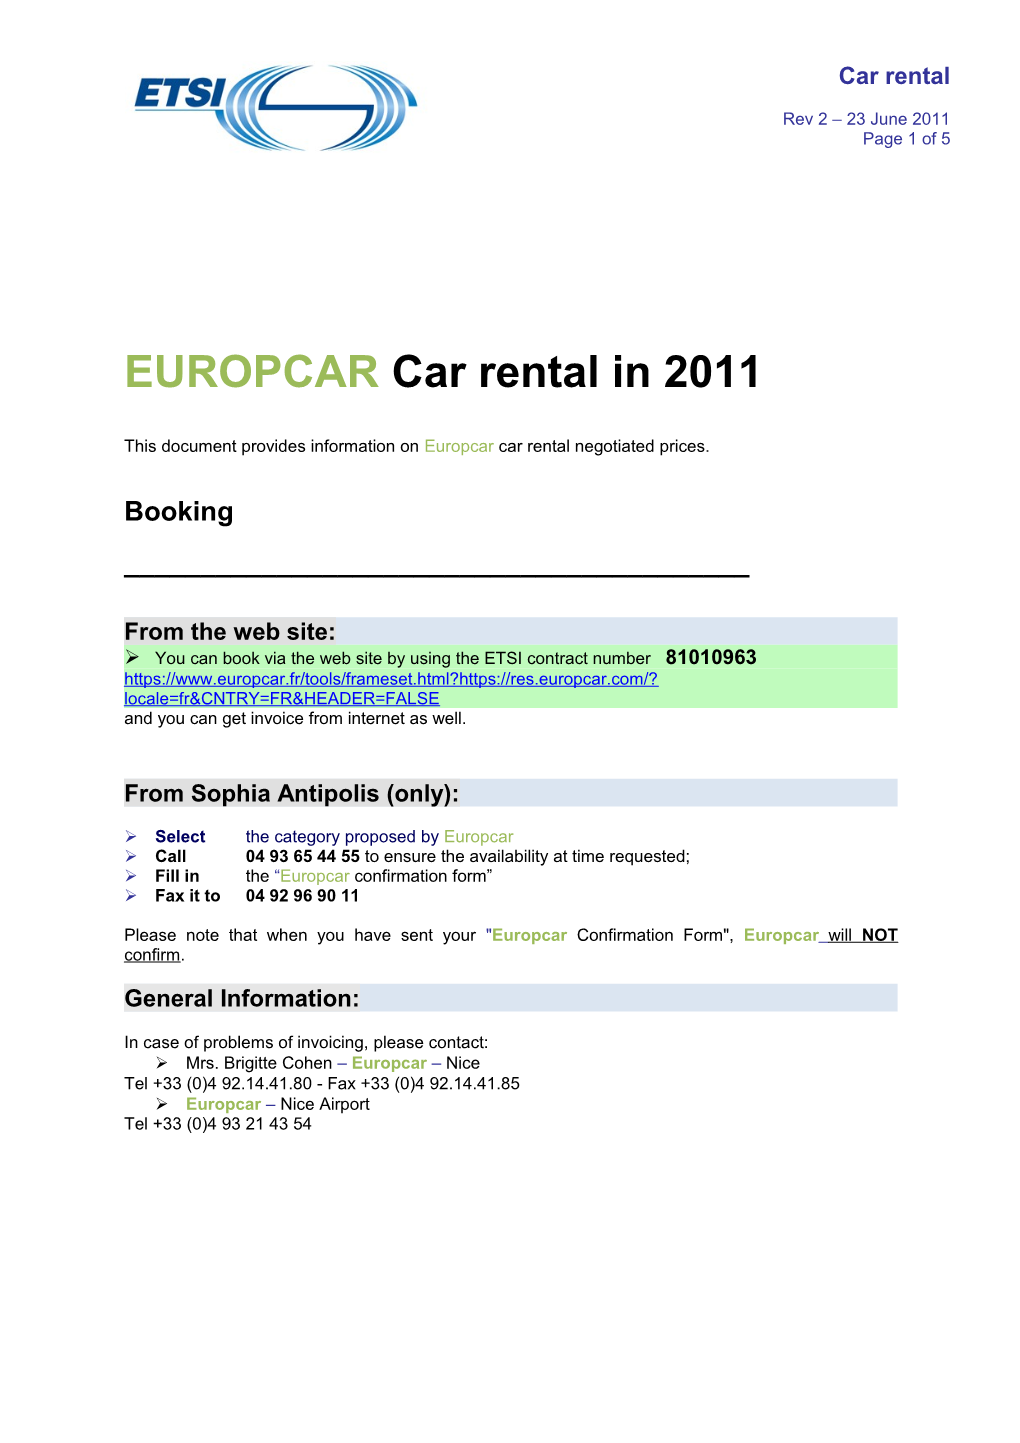 EUROPCAR Car Rental in 2011